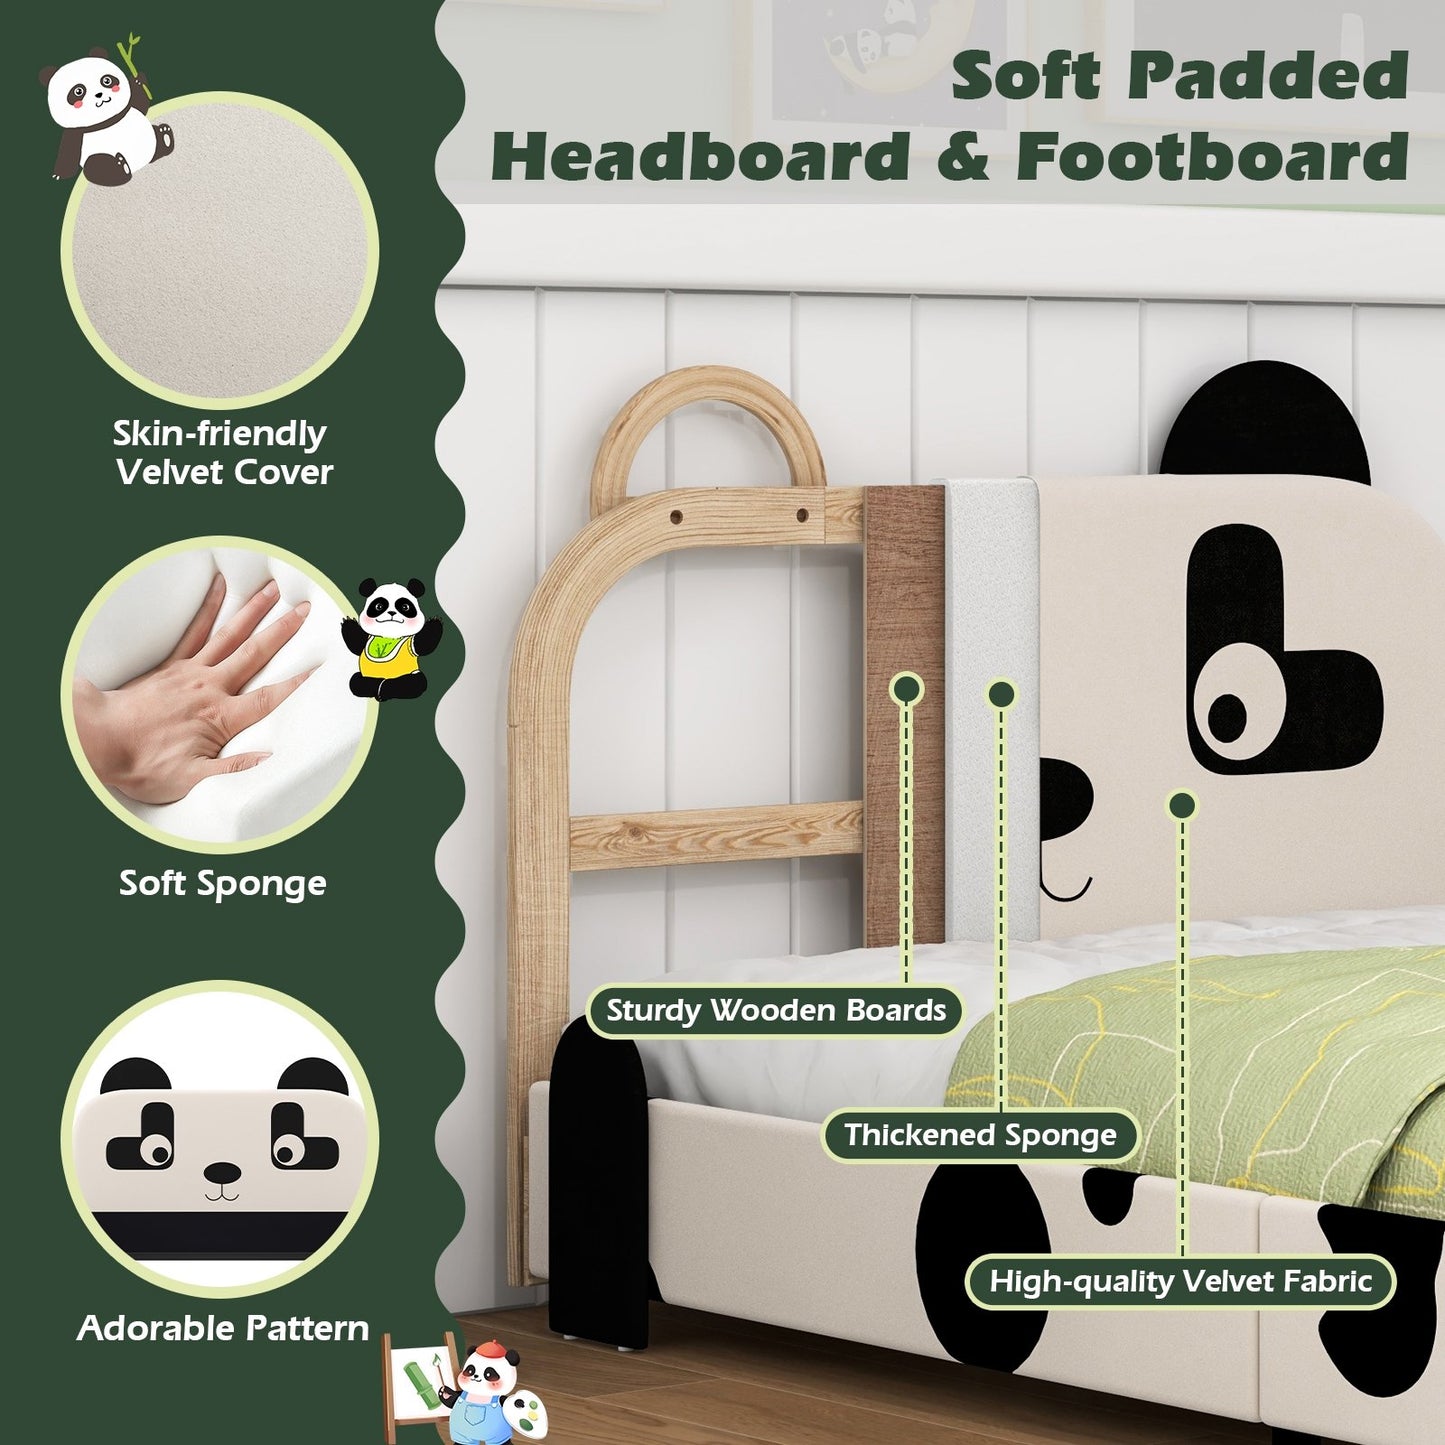 Twin Size Kids Bed with Cute Panda Headboard, Black & White - Gallery Canada